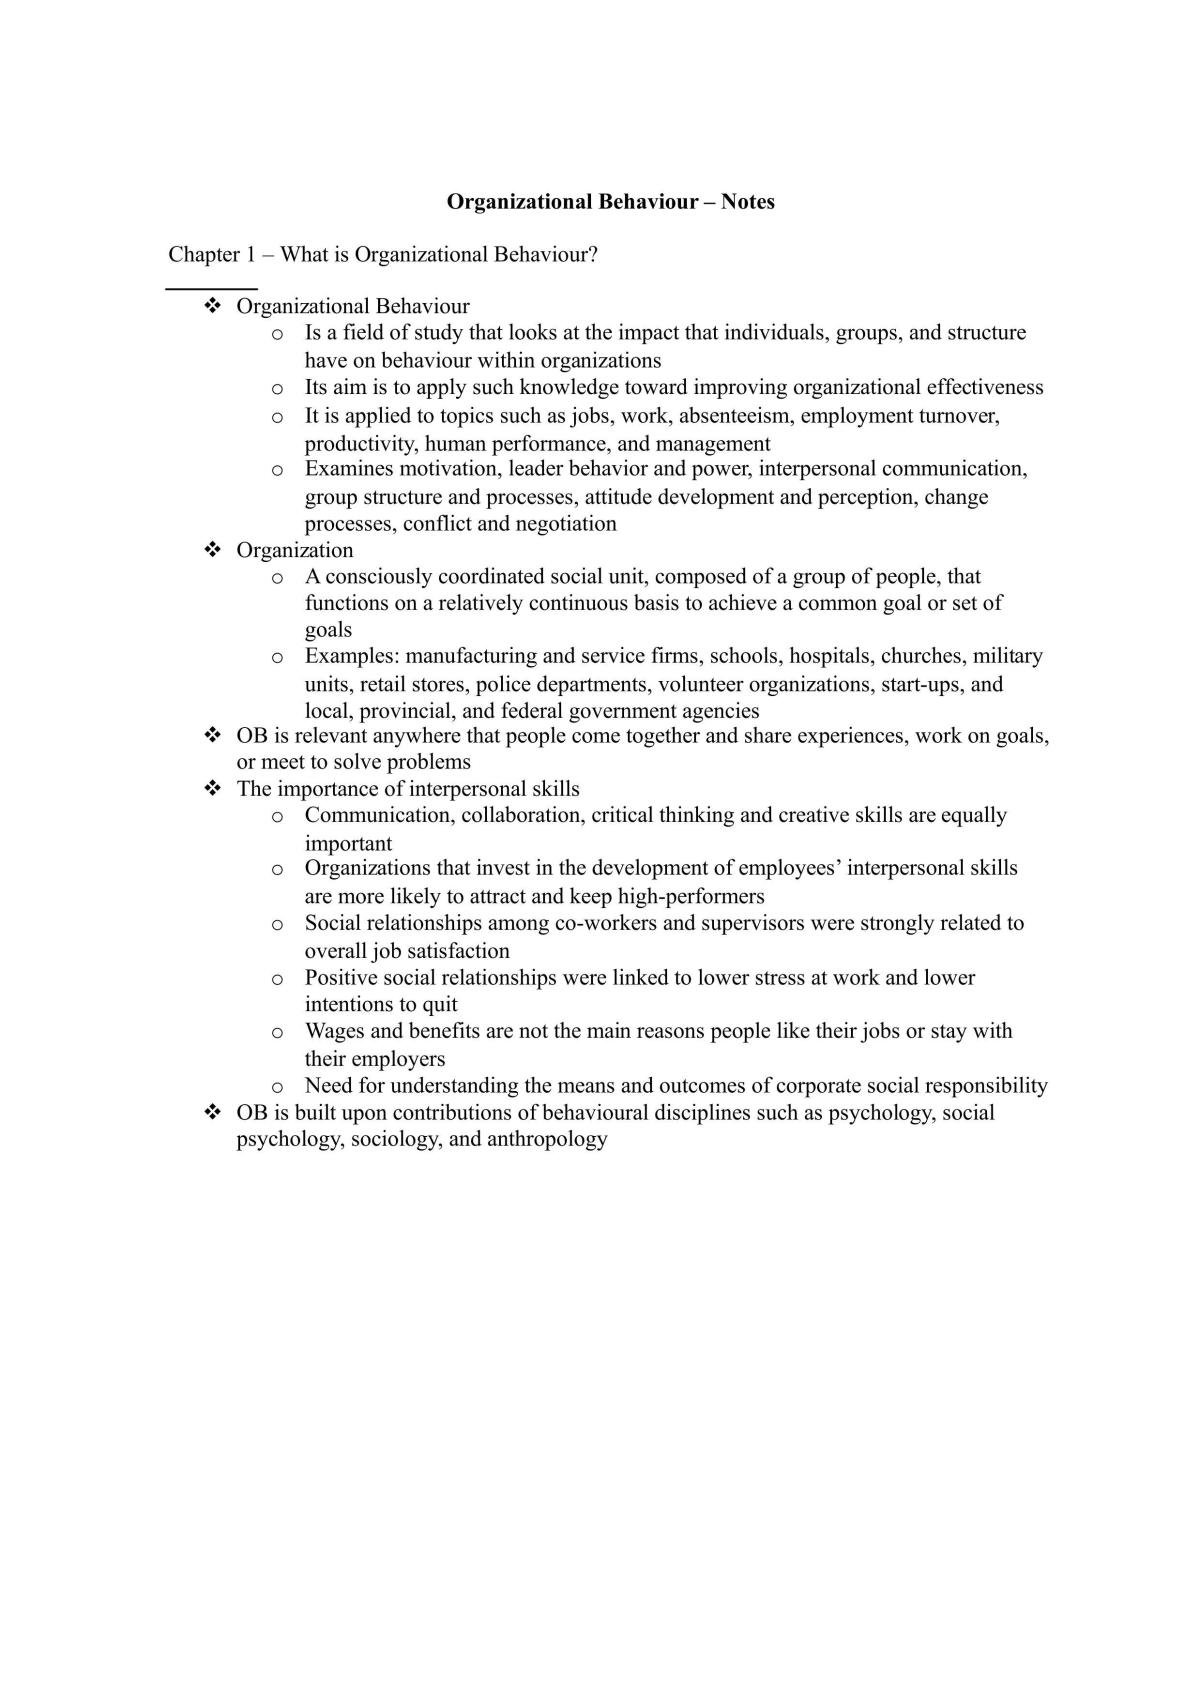 Organizational Behaviour Summary - Page 1